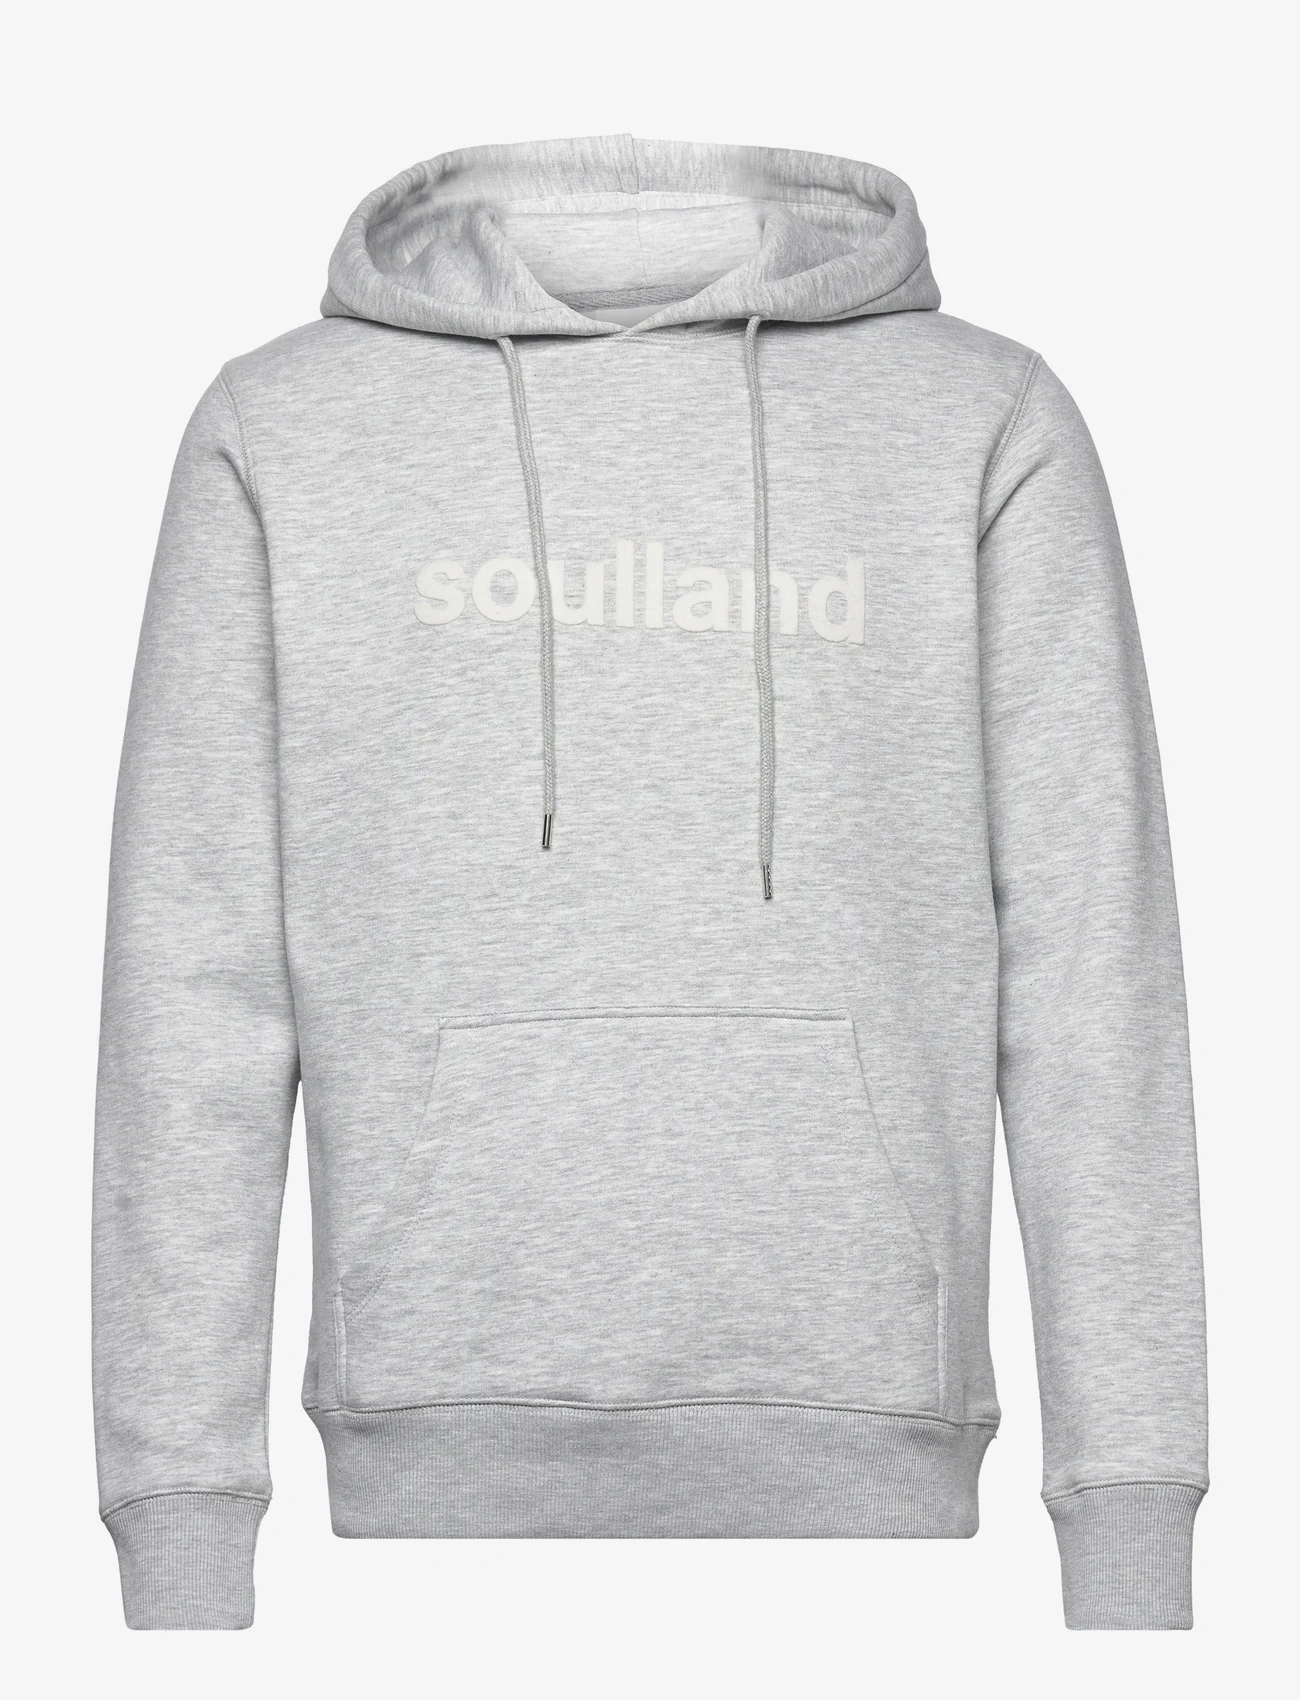 Soulland - Googie hoodie - sweats à capuche - grey melange - 0